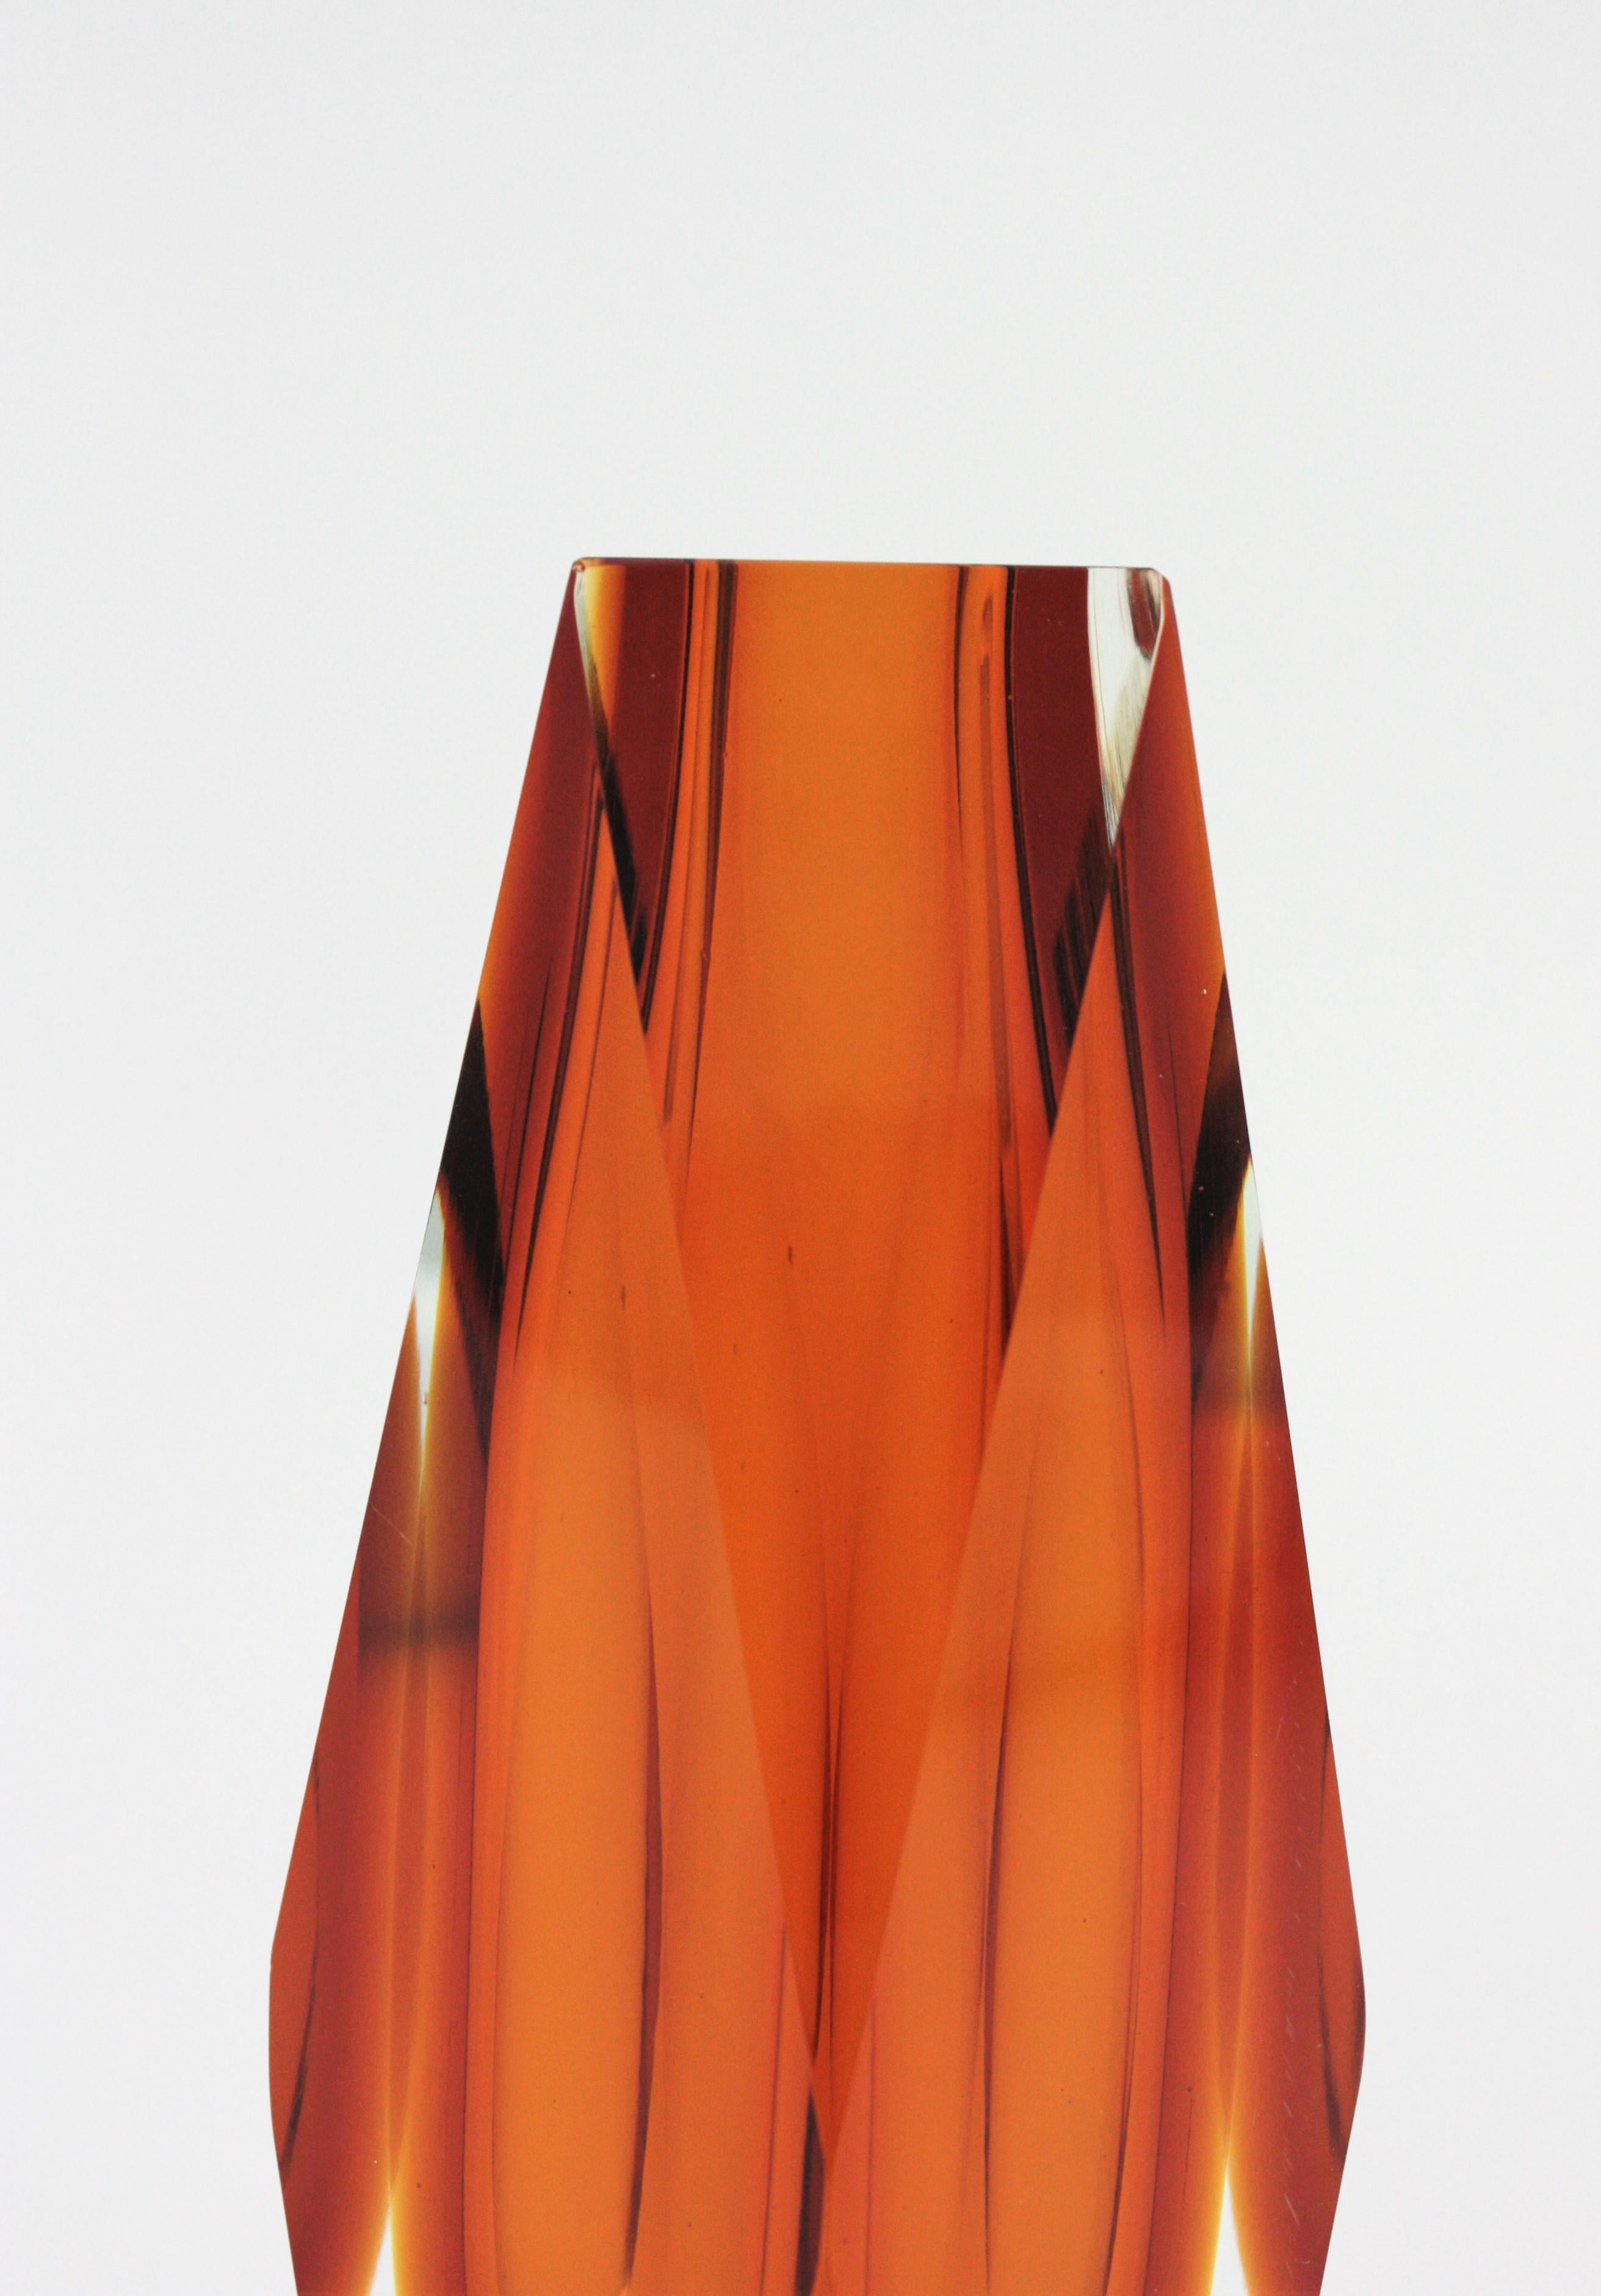 Italian Huge Mandruzzato Murano Faceted Orange Sommerso Glass Vase For Sale